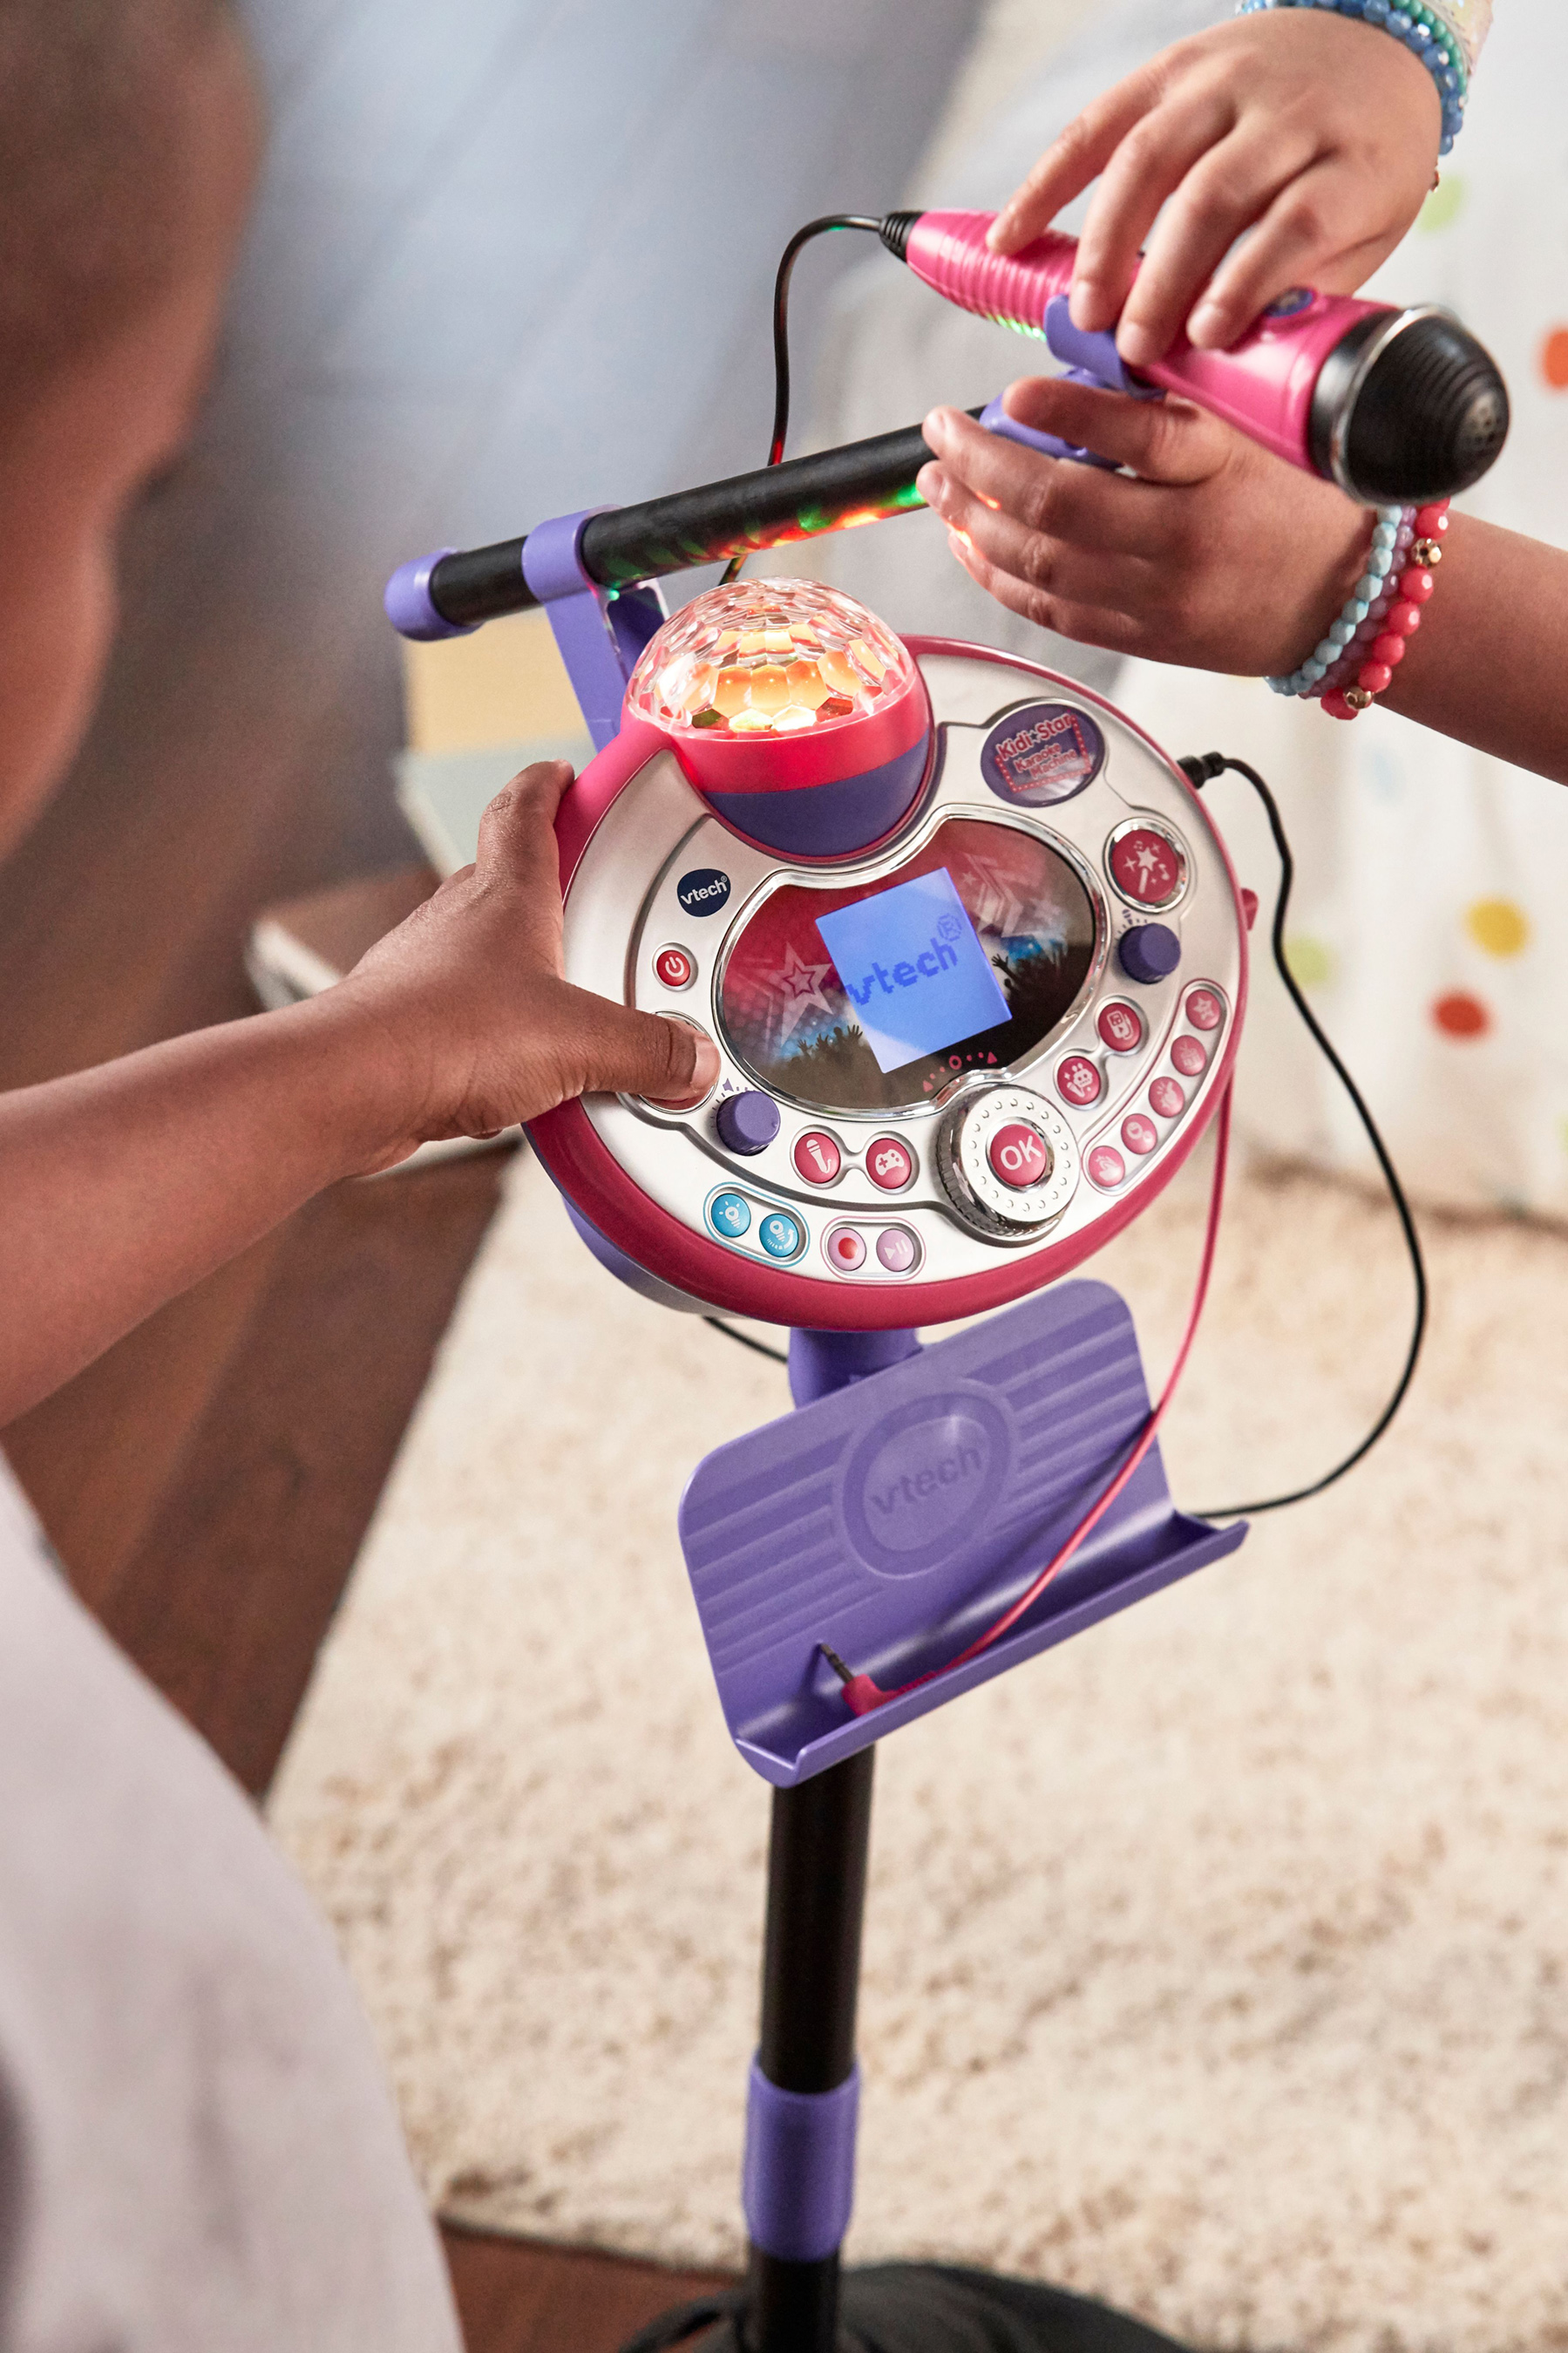 VTech® Puts Kids in the Spotlight with New Kidi Star Karaoke Machine™